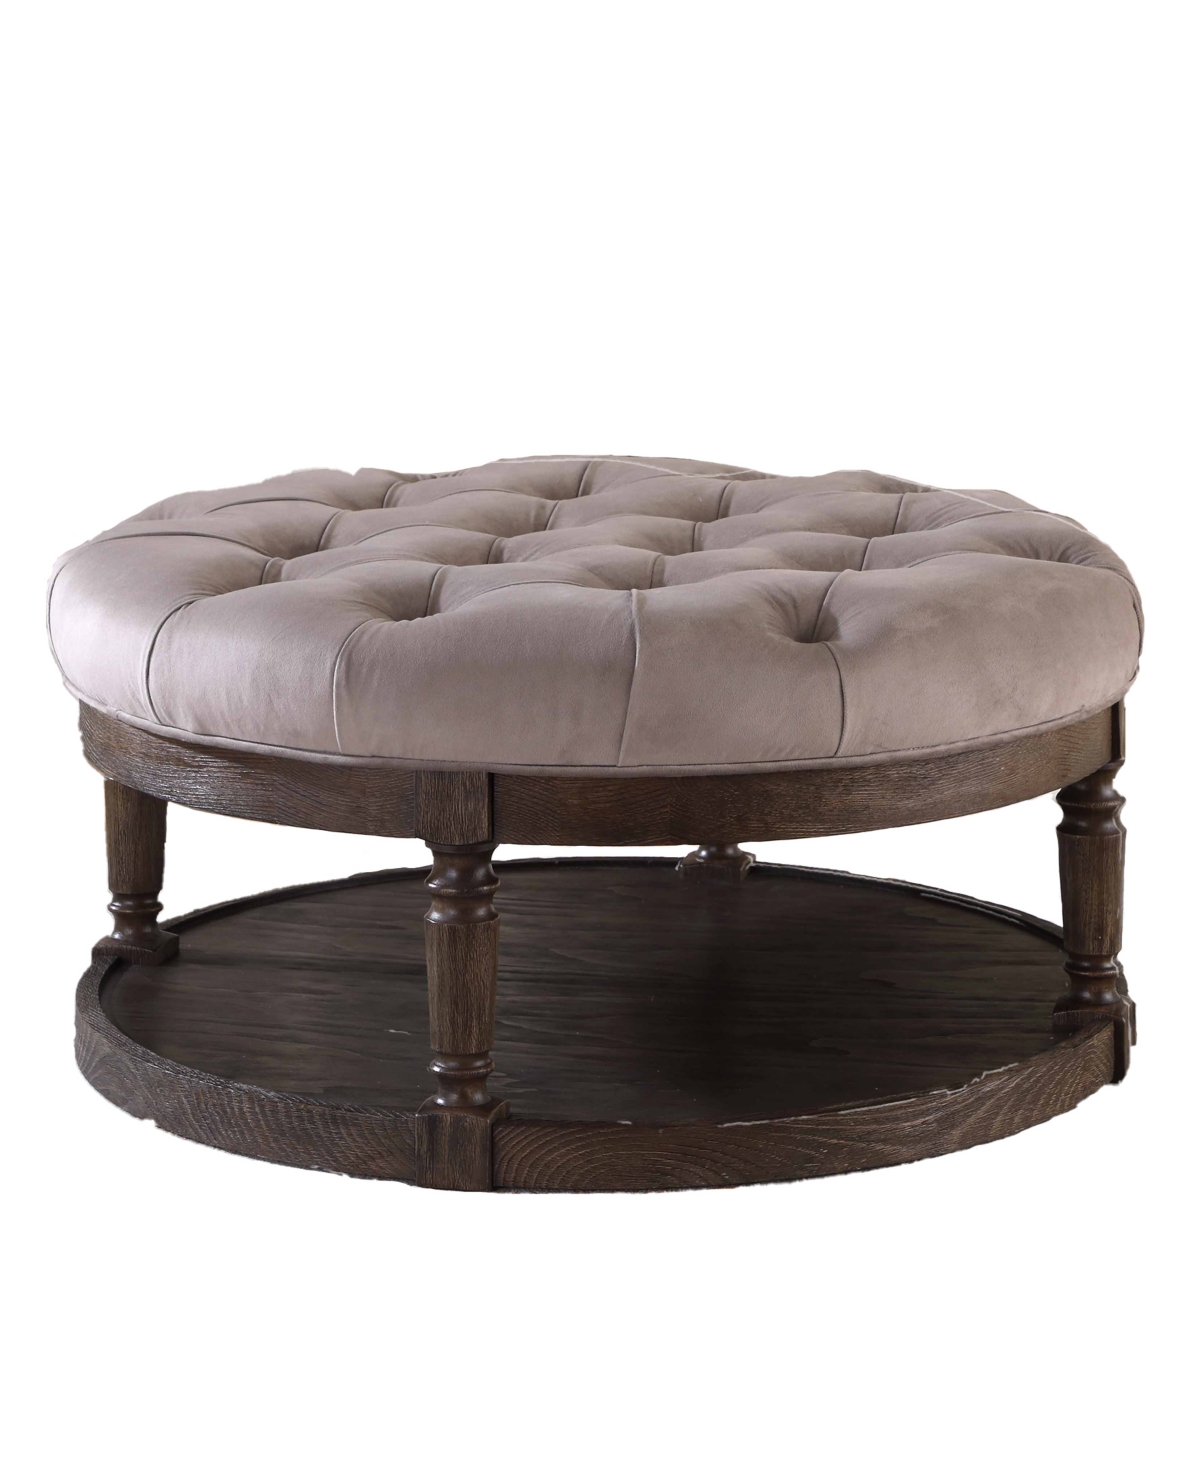 Shop Best Master Furniture Samuel Tufted Upholstered Round Ottoman In Otter